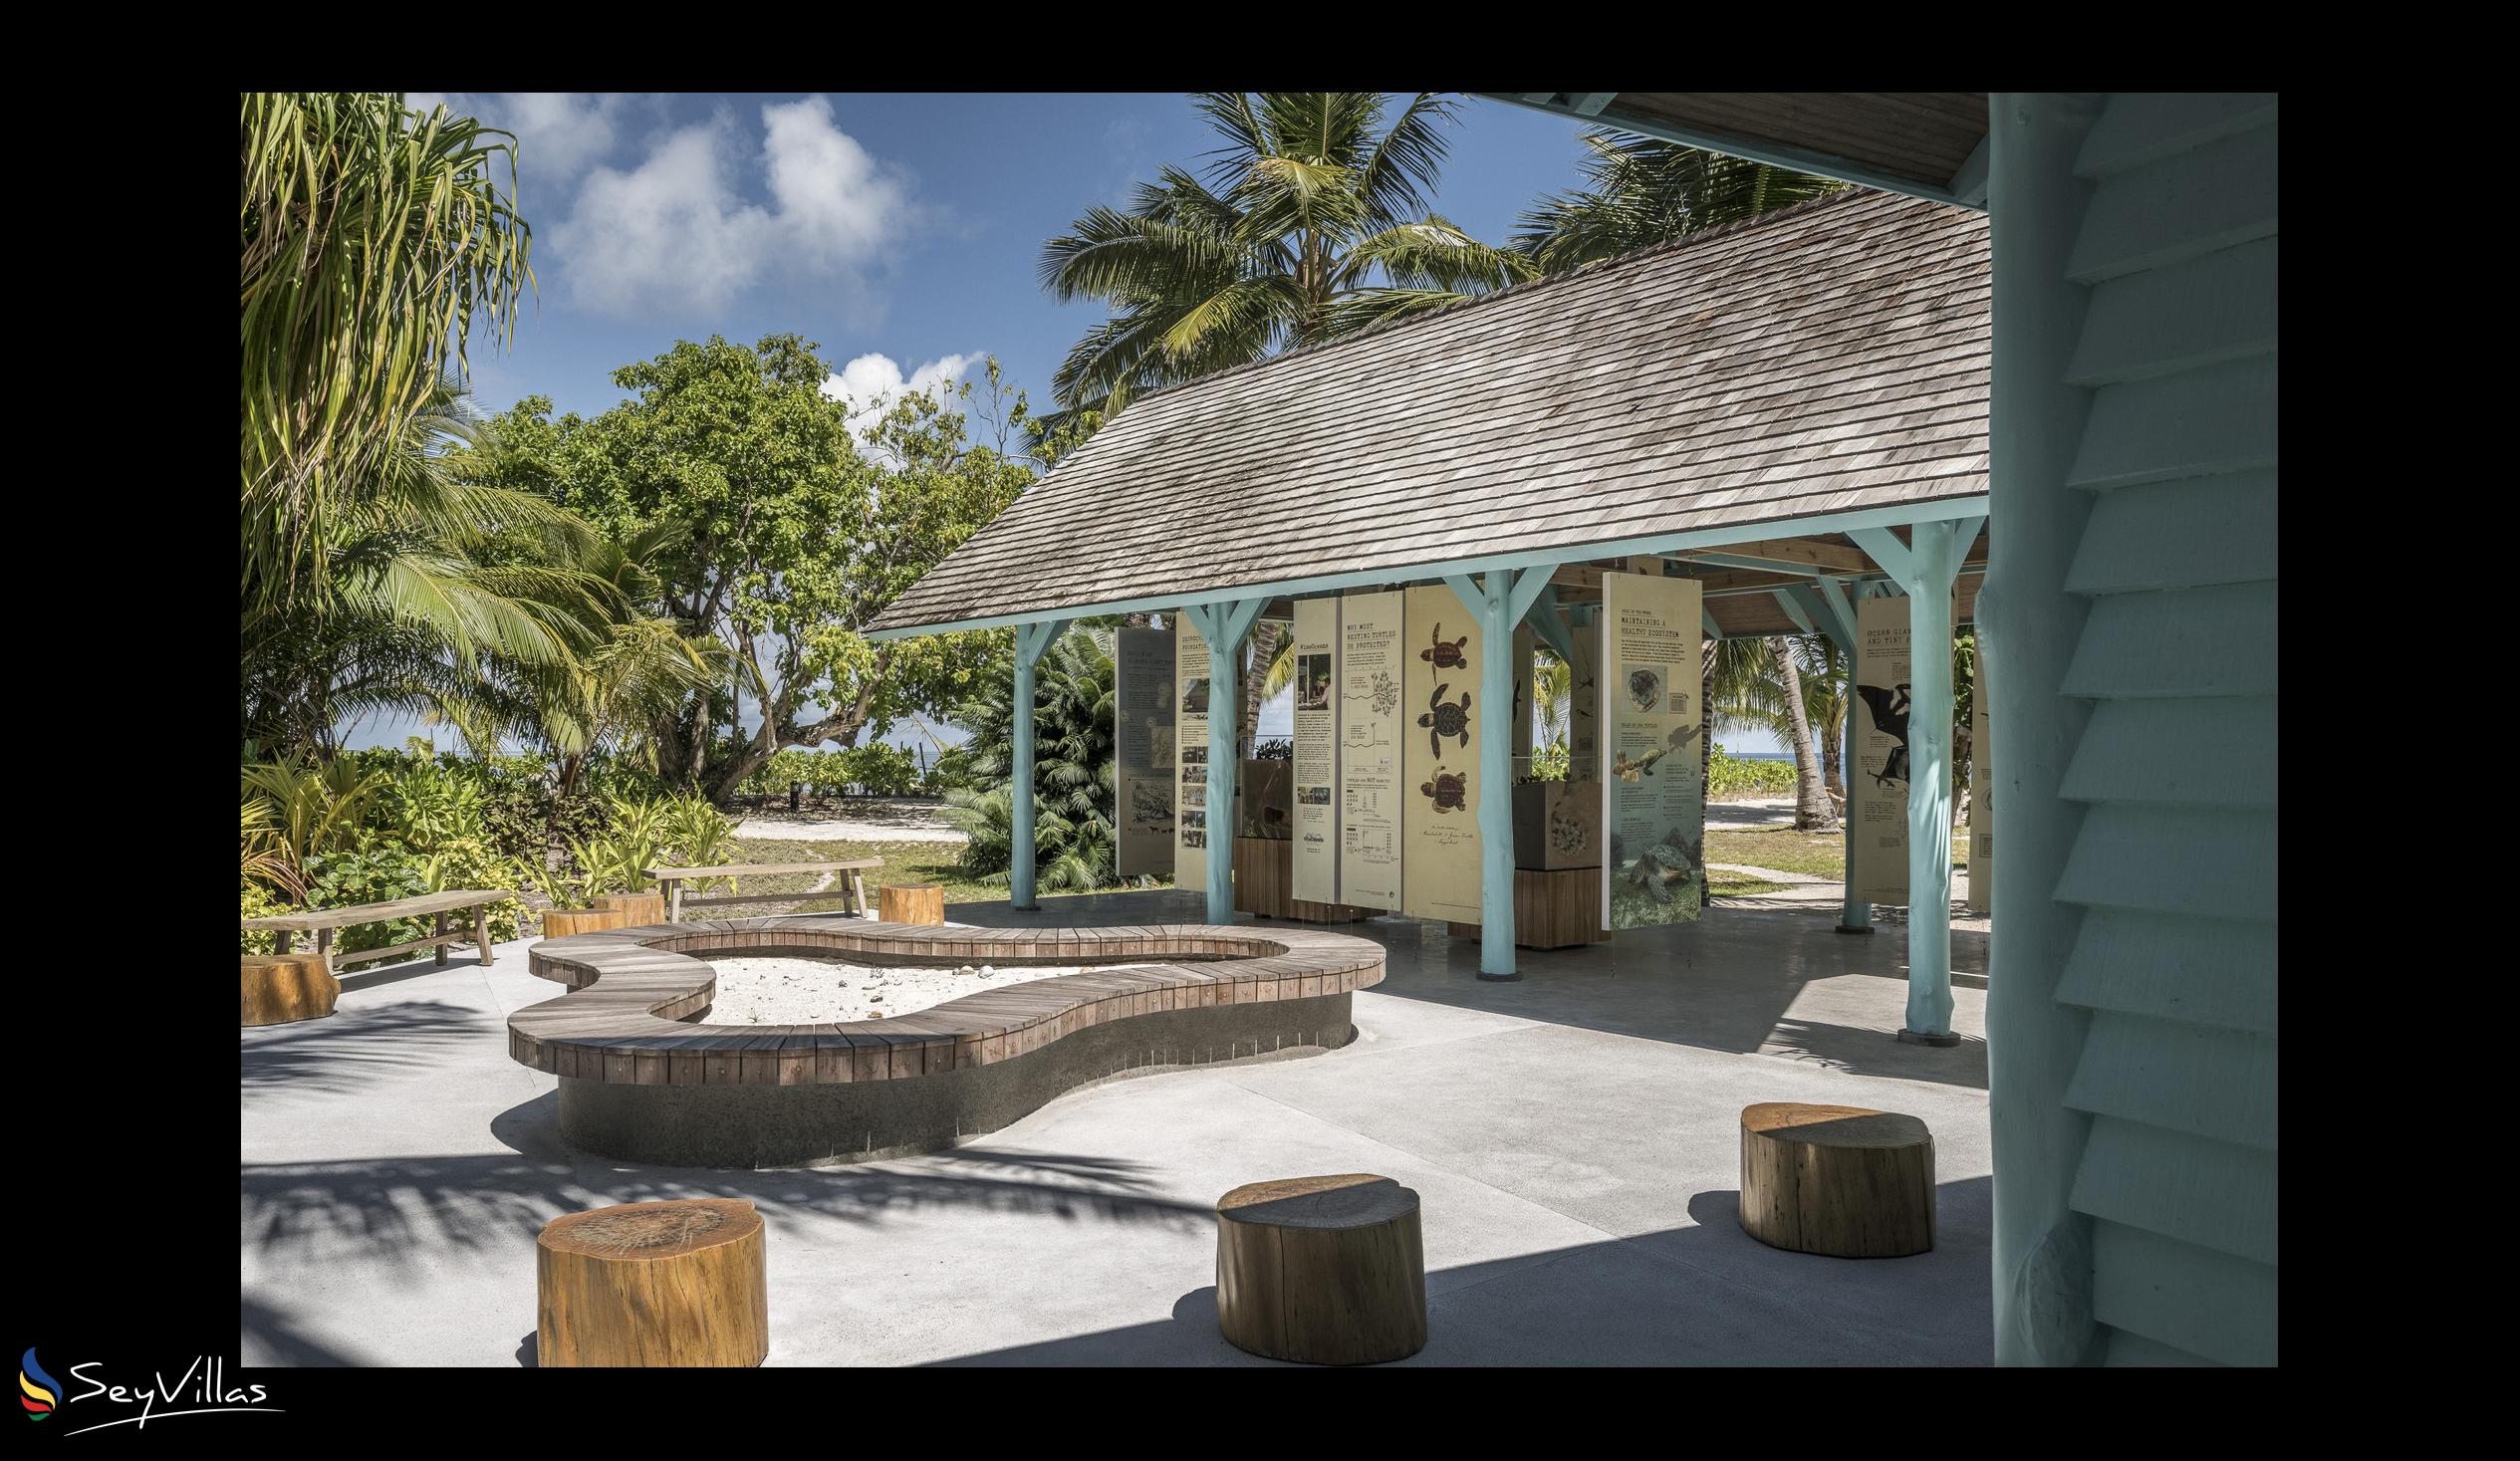 Foto 41: Four Seasons Resort Desroches Island - Innenbereich - Desroches Island (Seychellen)